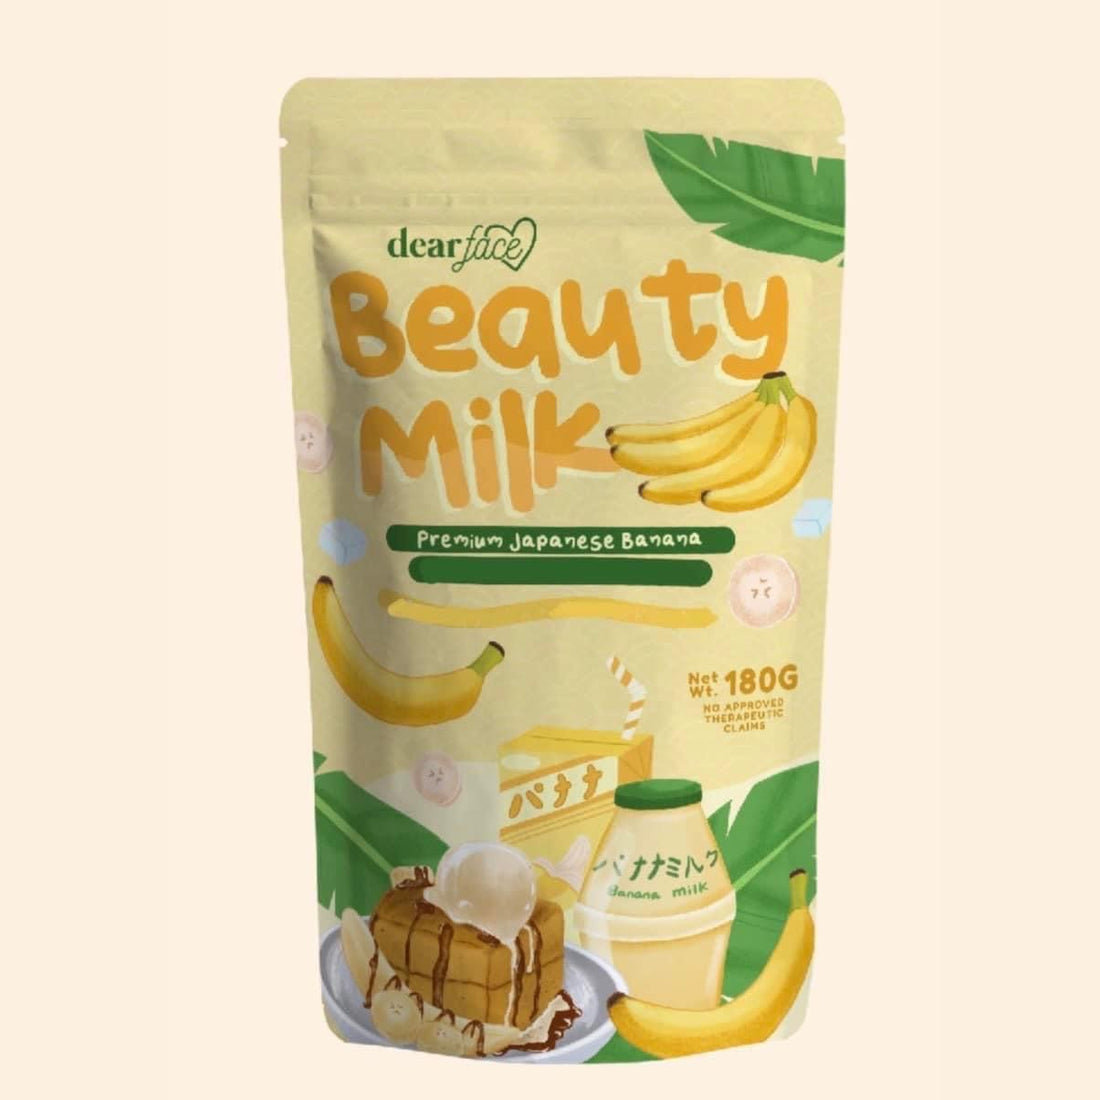 Beauty Milk’s 4th flavor